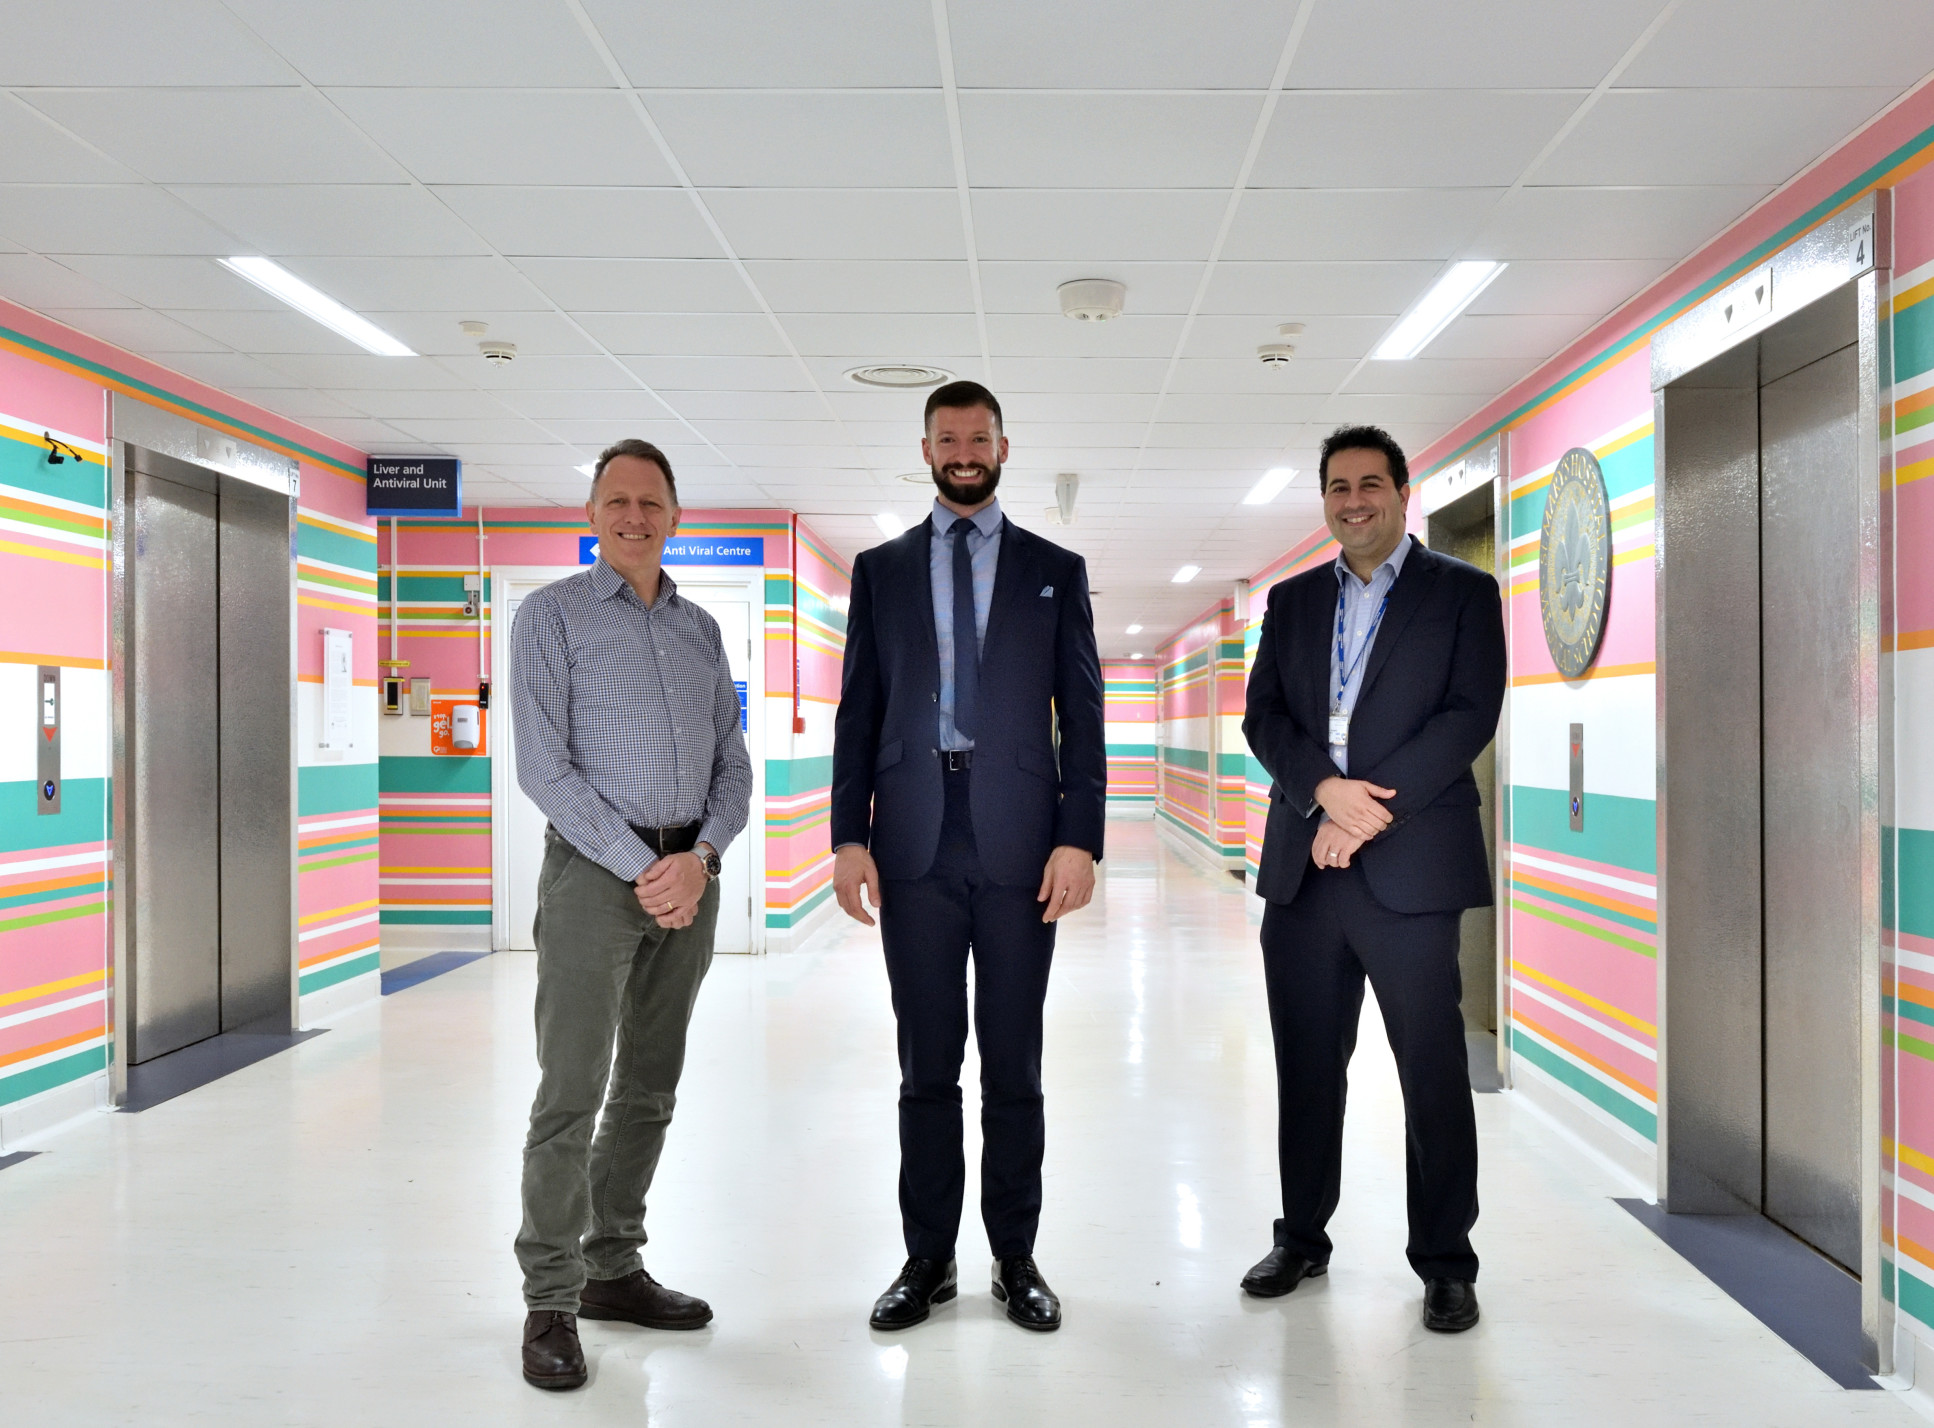 Dr Ben Mullish, Professor Julian Marchesi and Dr James McIlroy in a corridor